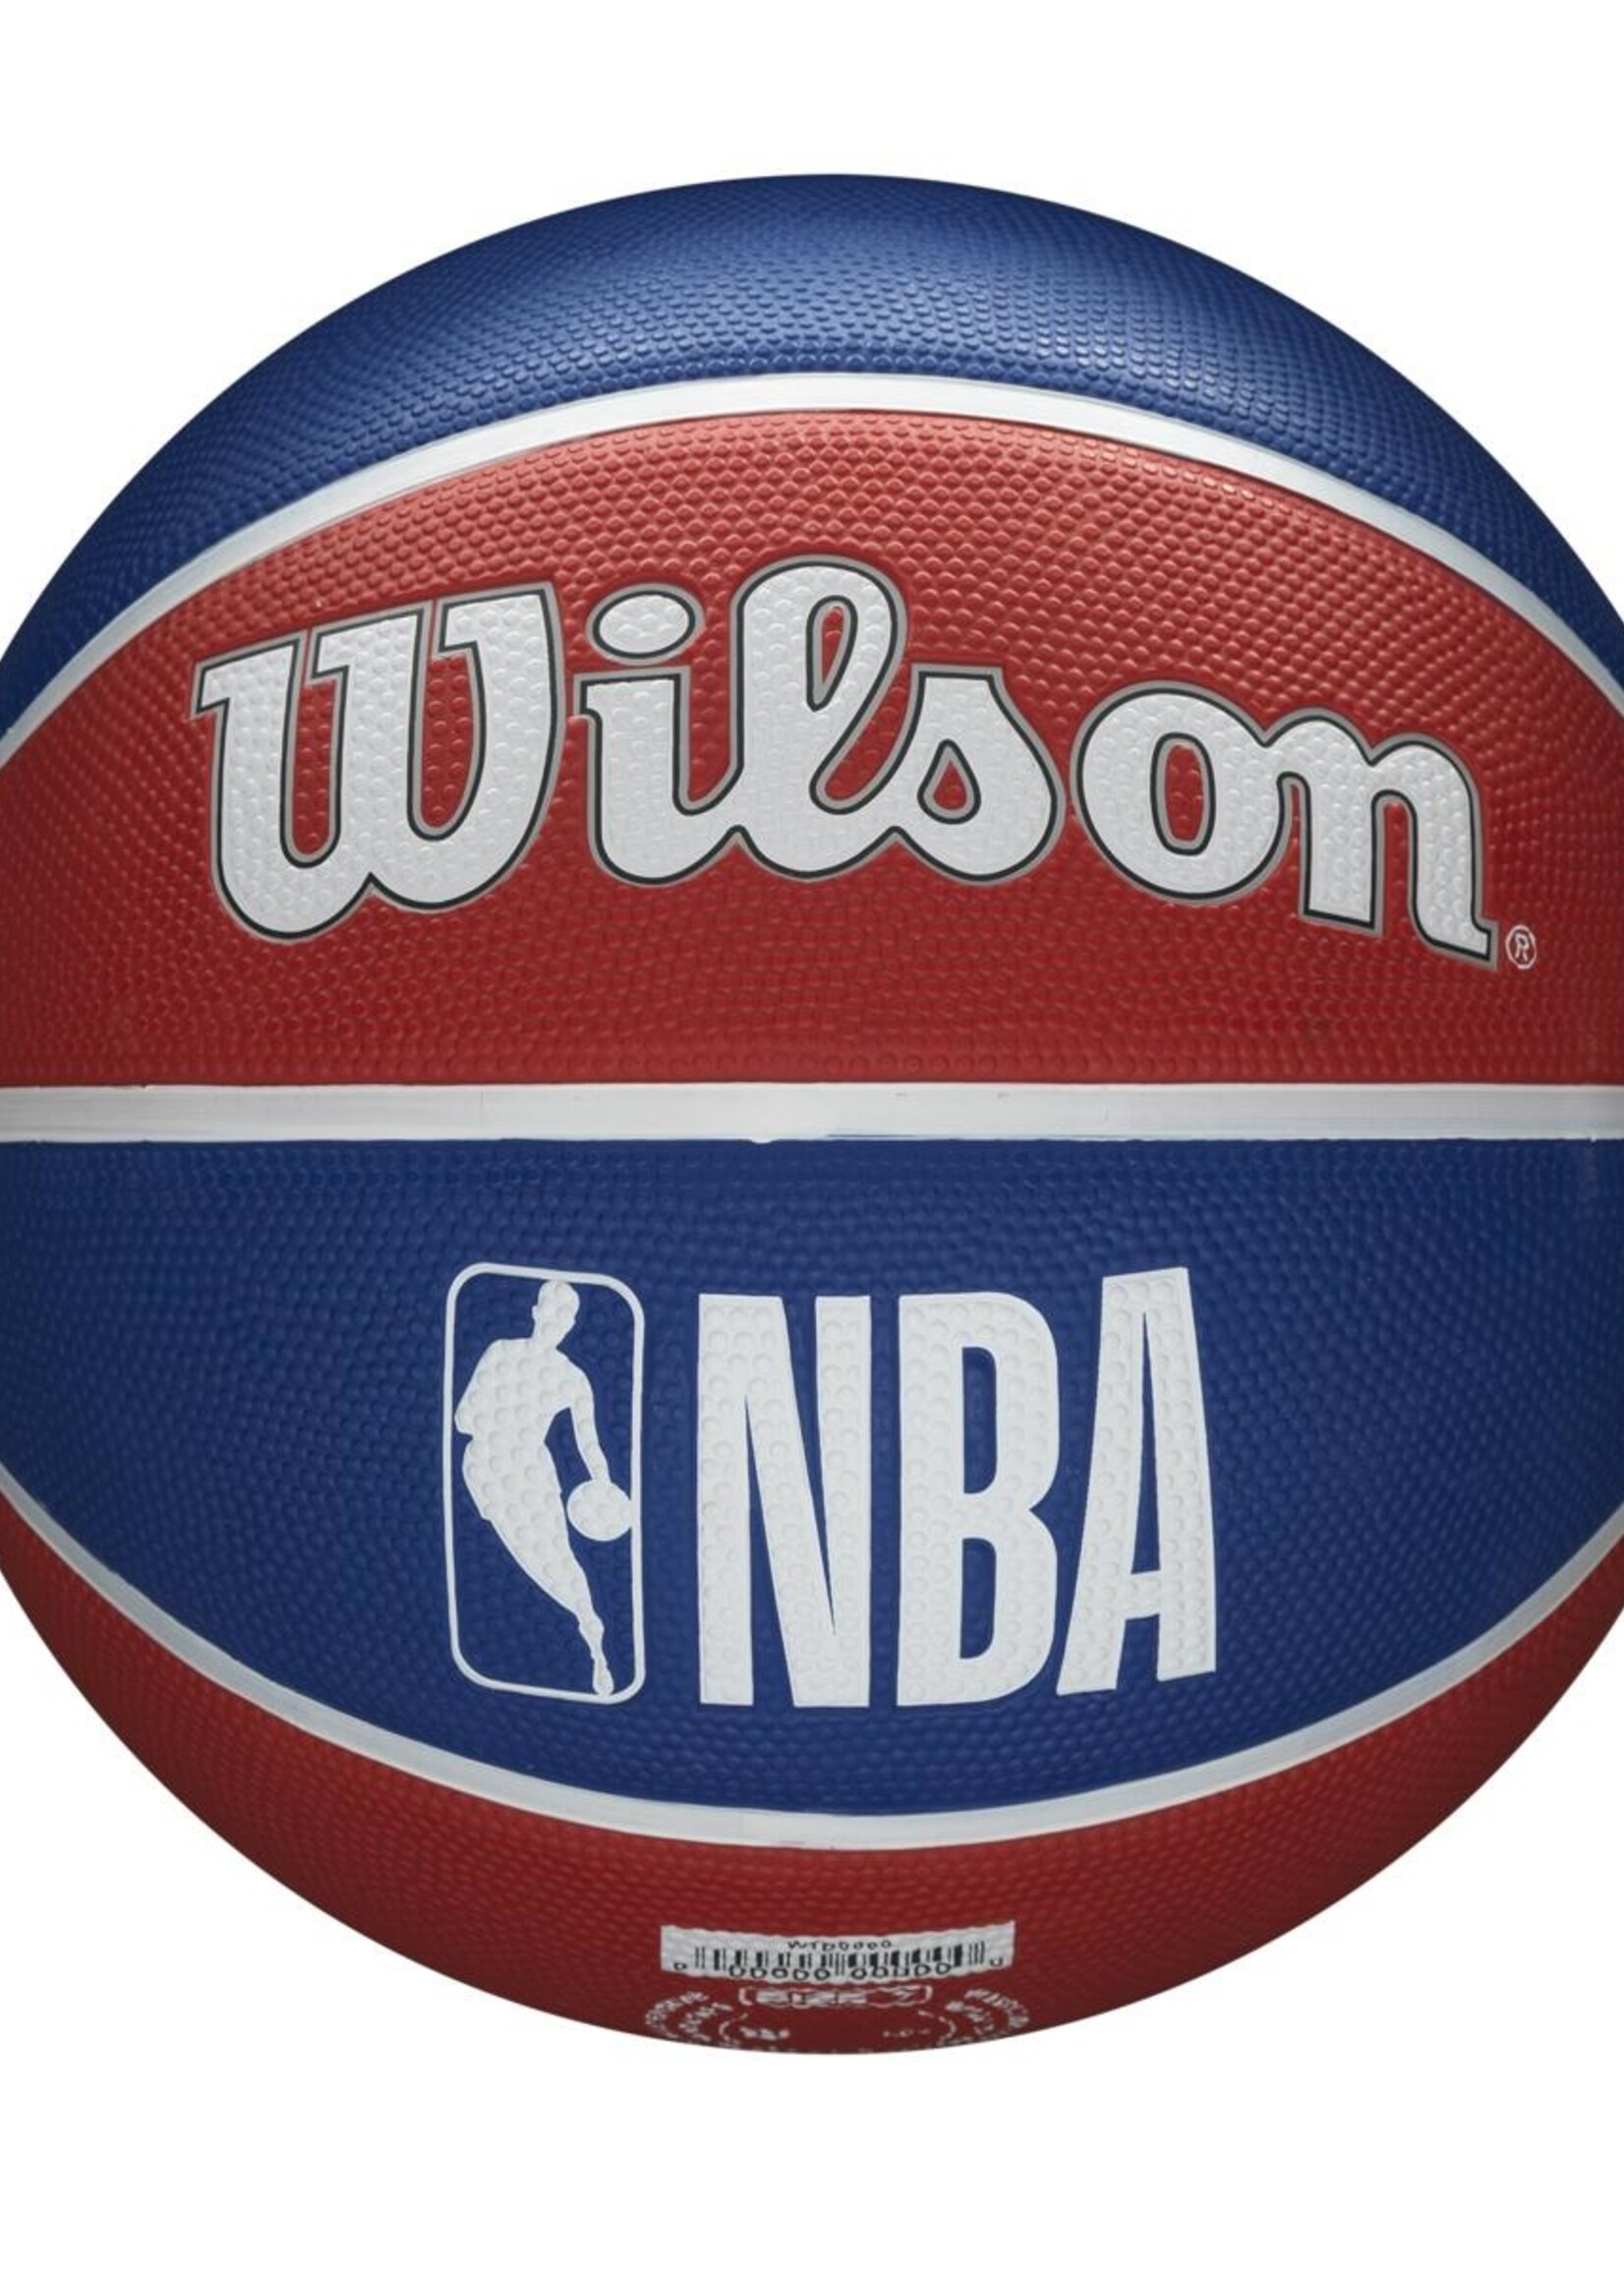 Wilson Ballon de basket Wilson NBA LA CLIPPERS Tribute (7)